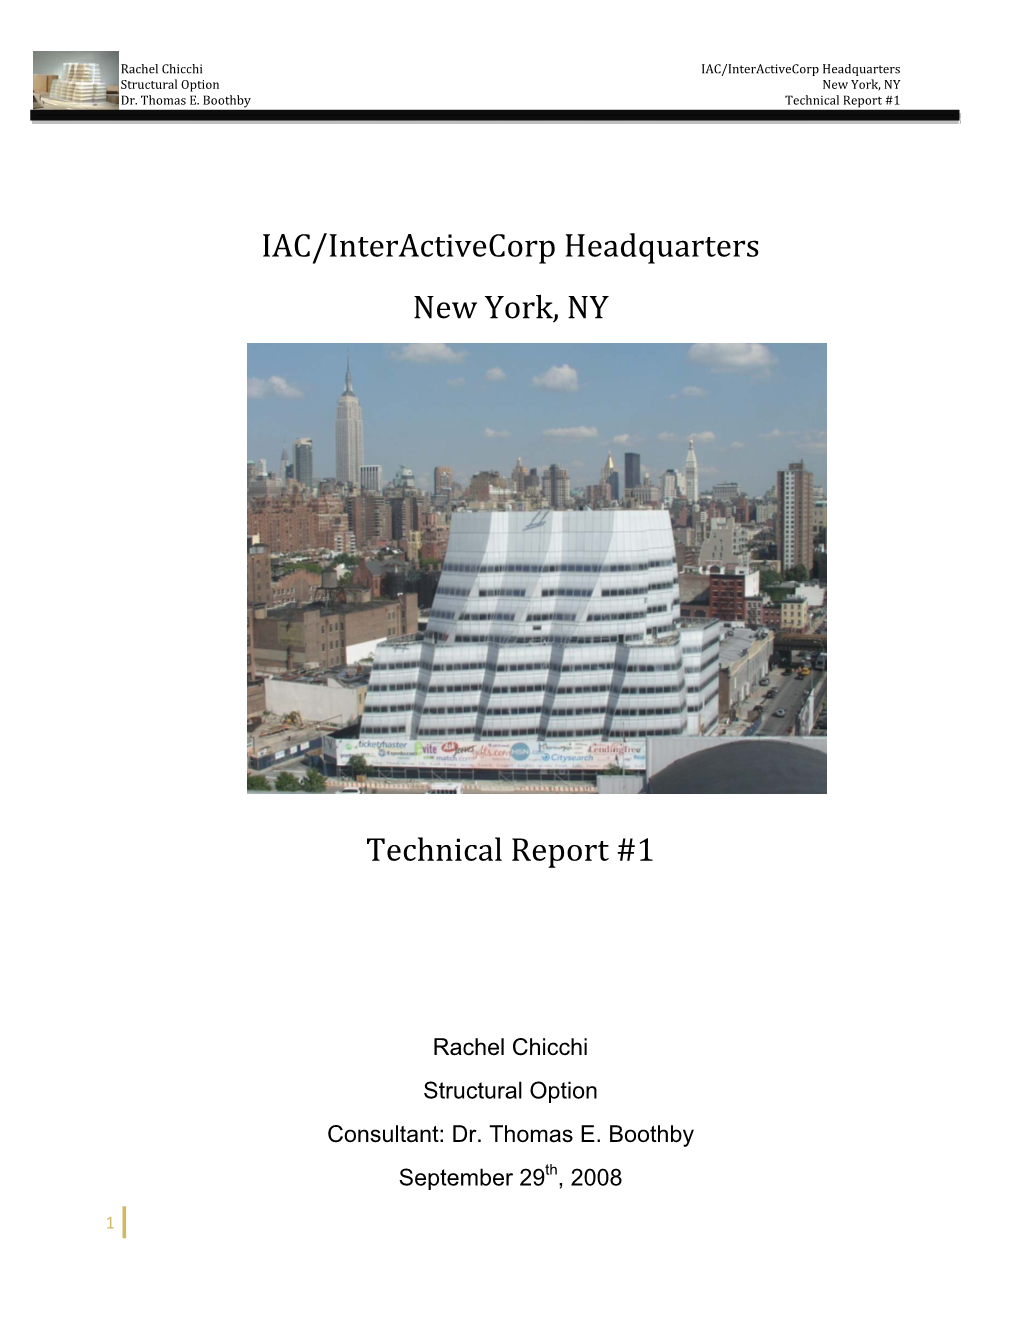 IAC/Interactivecorp Headquarters New York, NY Technical Report #1